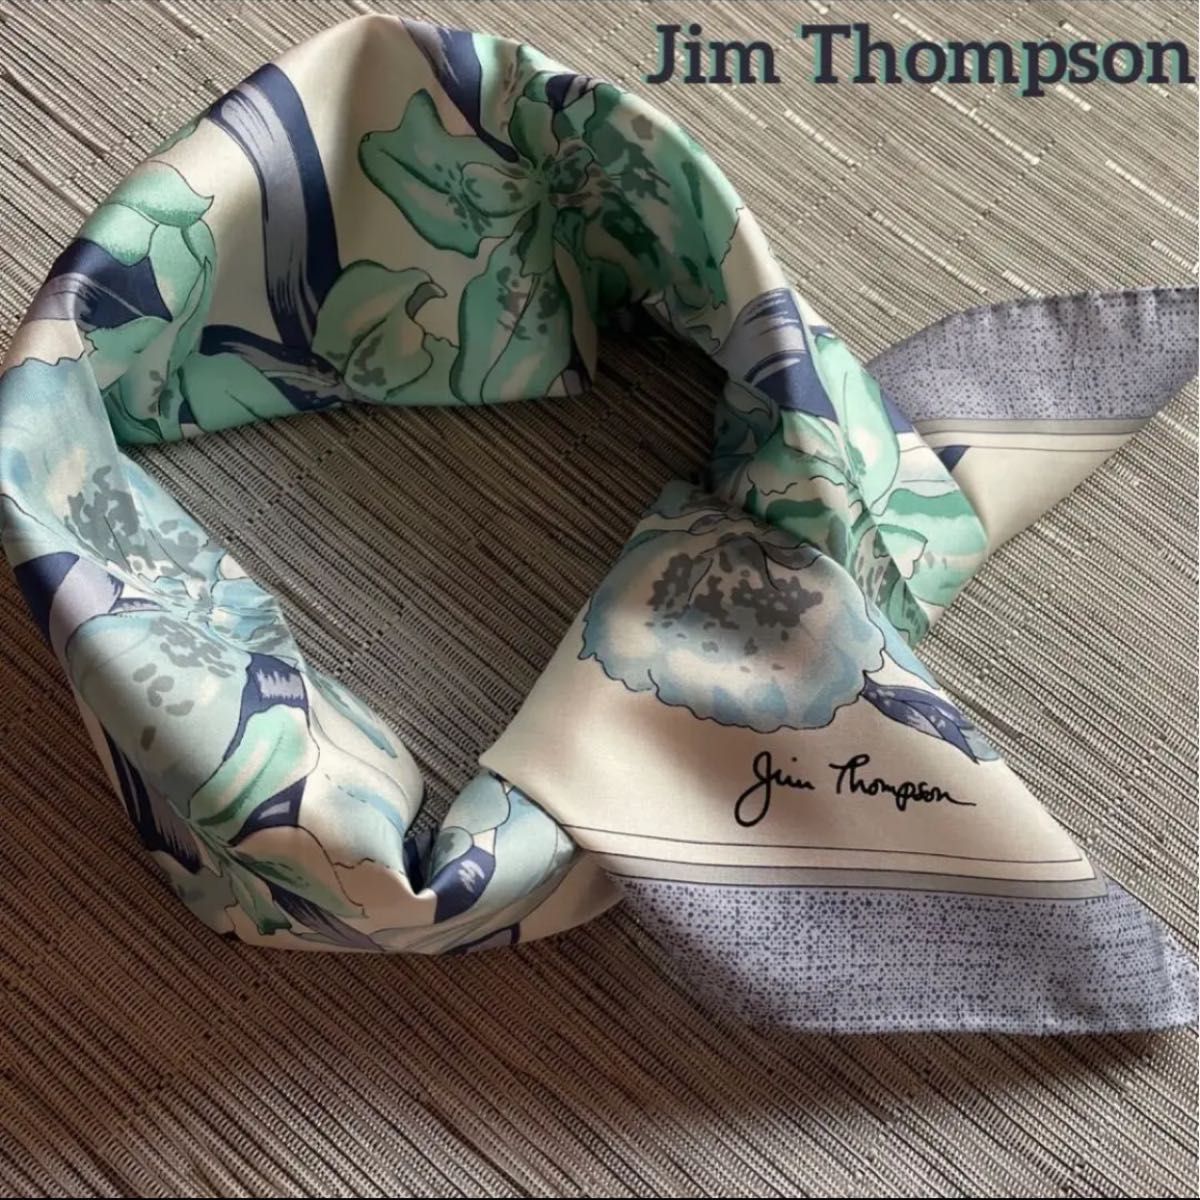 Jim thompson ジムトンプソン 大判シルクスカーフ(花柄・グレイッシュ